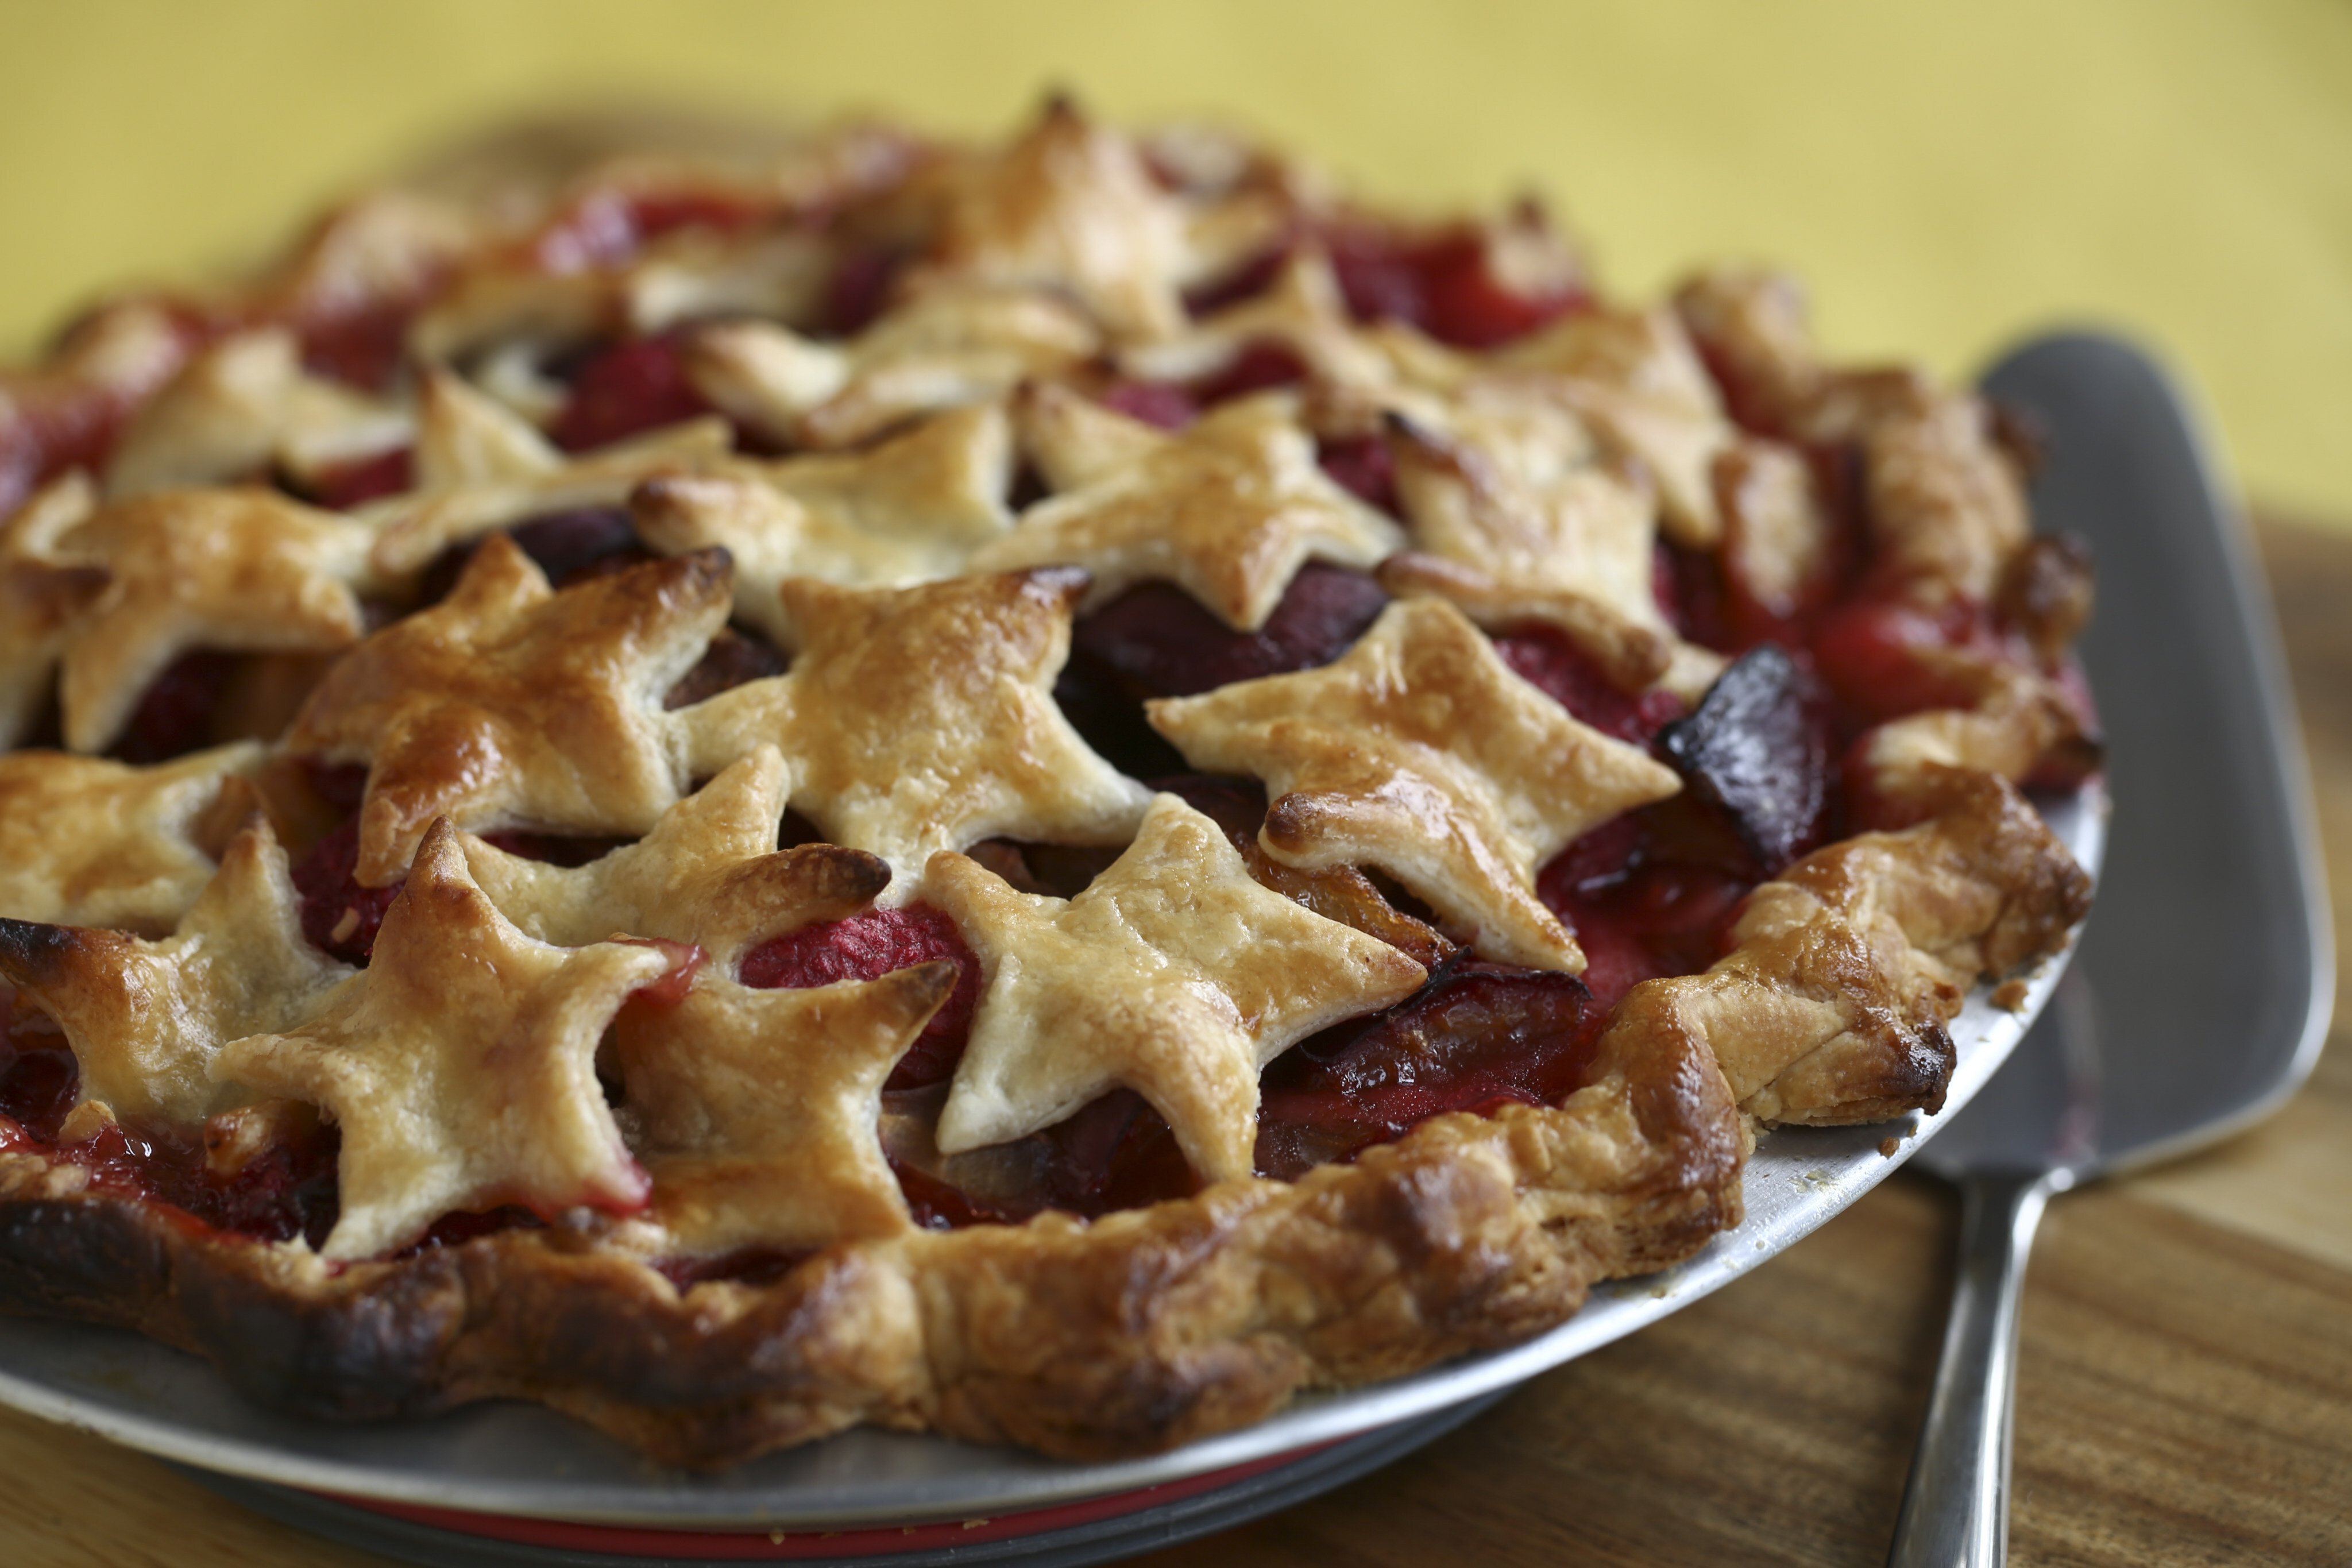 Plum and raspberry pie is a sweet, tart dessert that looks as good as it tastes. Photo: Jonathan Wong